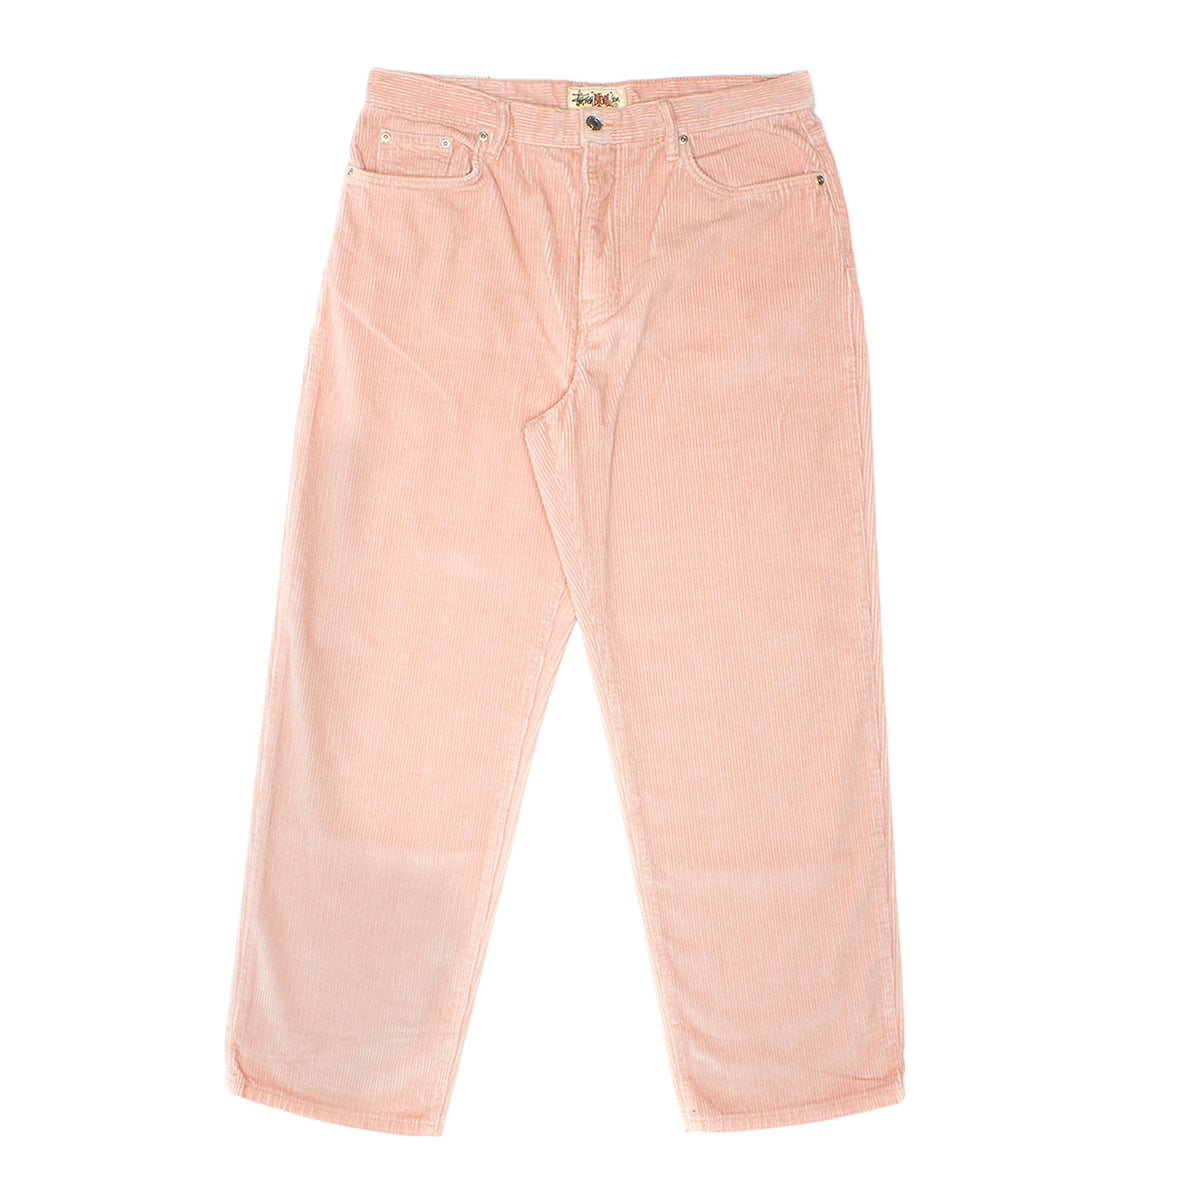 Stussy Corduroy Big Ol' Jeans - Washed Pink